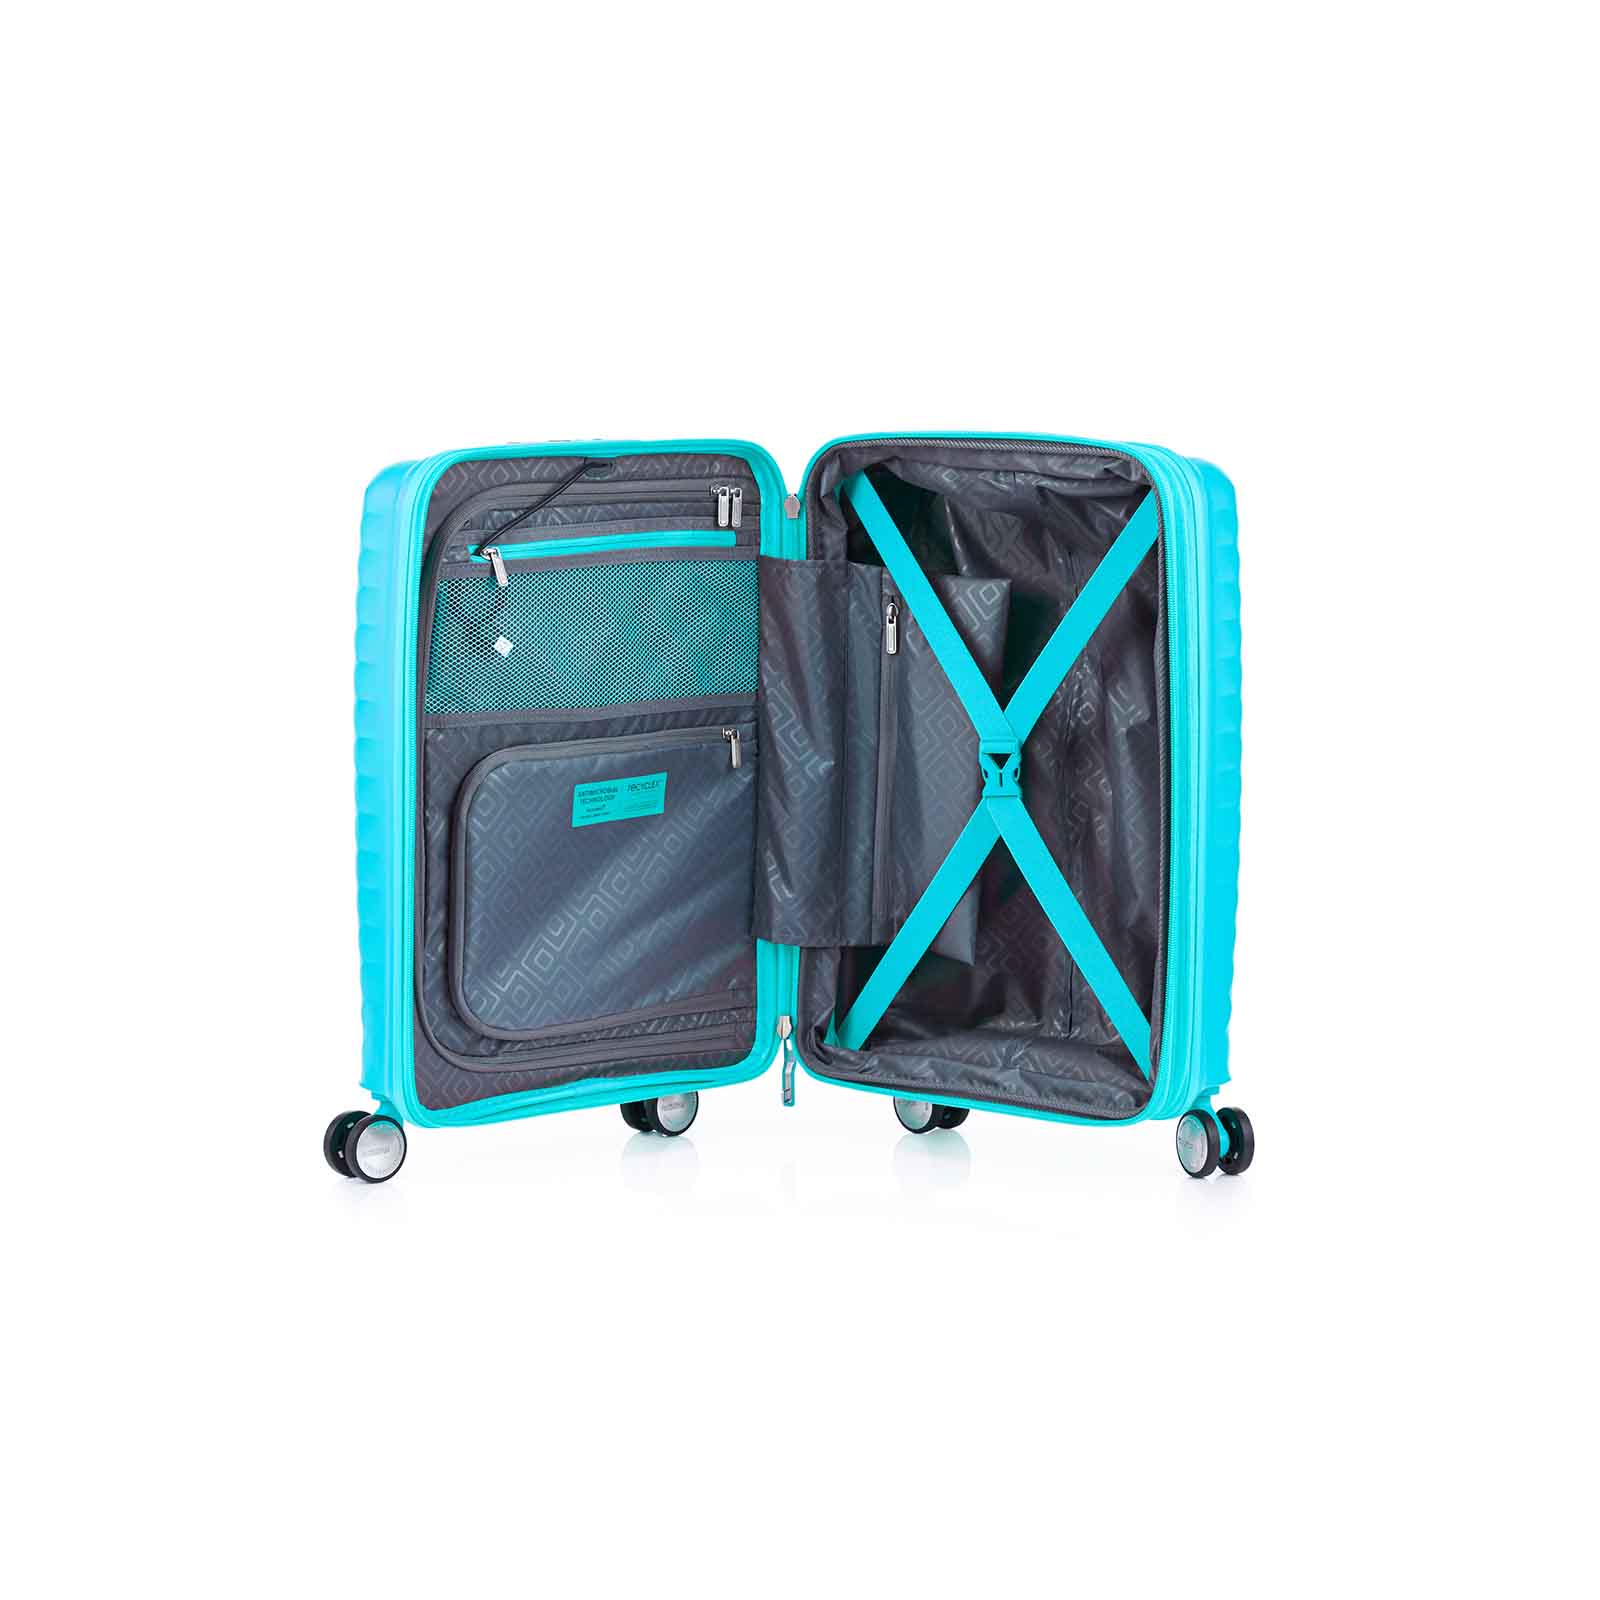 American-Tourister-Squasem-55cm-Carry-On-Suitcase-Aqua-Blue-Open